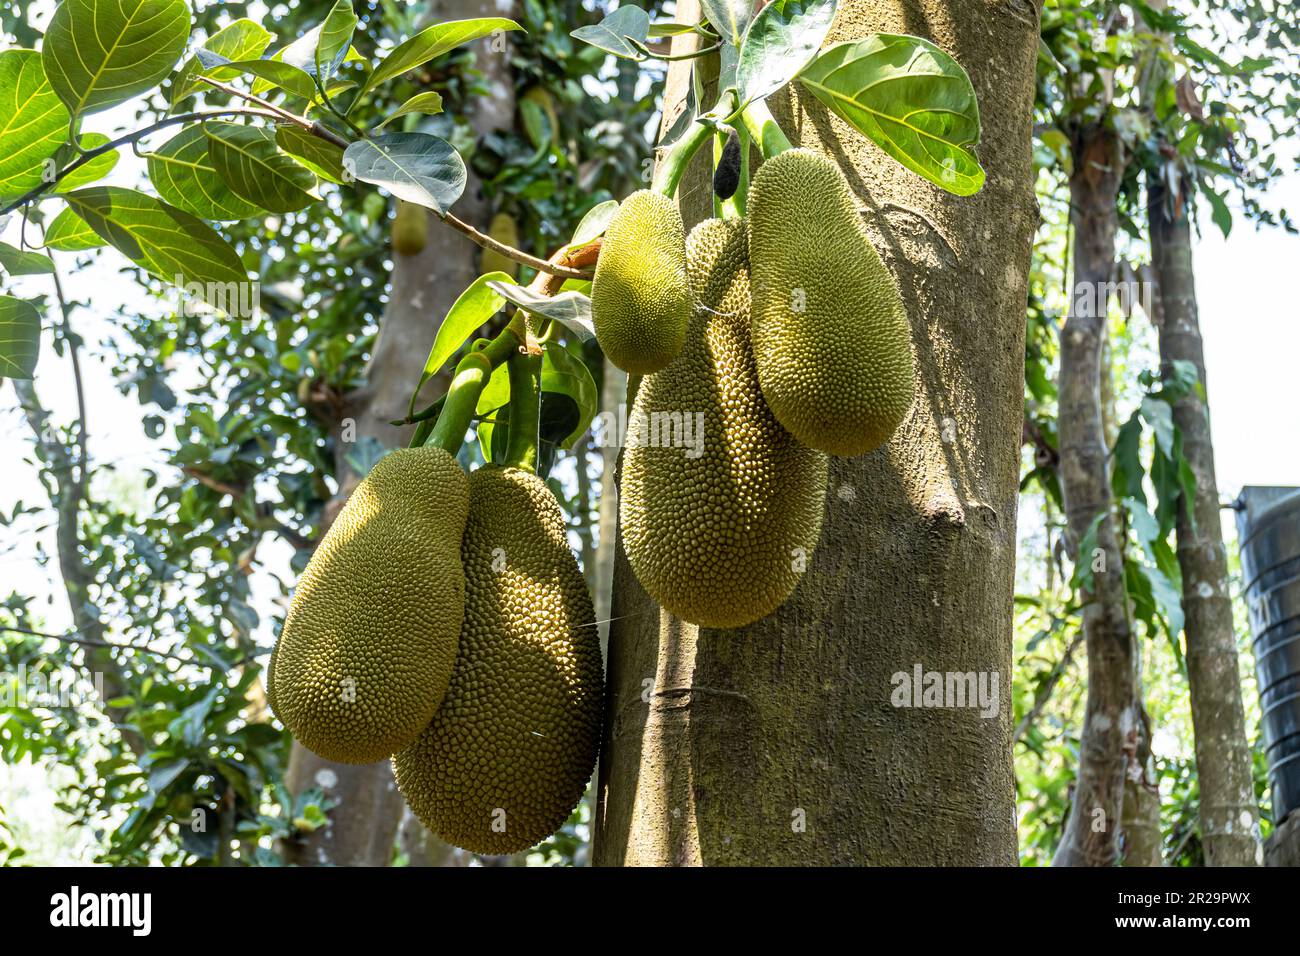 This fruit is scientific name is Artocarpus heterophyllus. Jackfruit still on the tree. The jackfruit also known as jack tree. Stock Photo